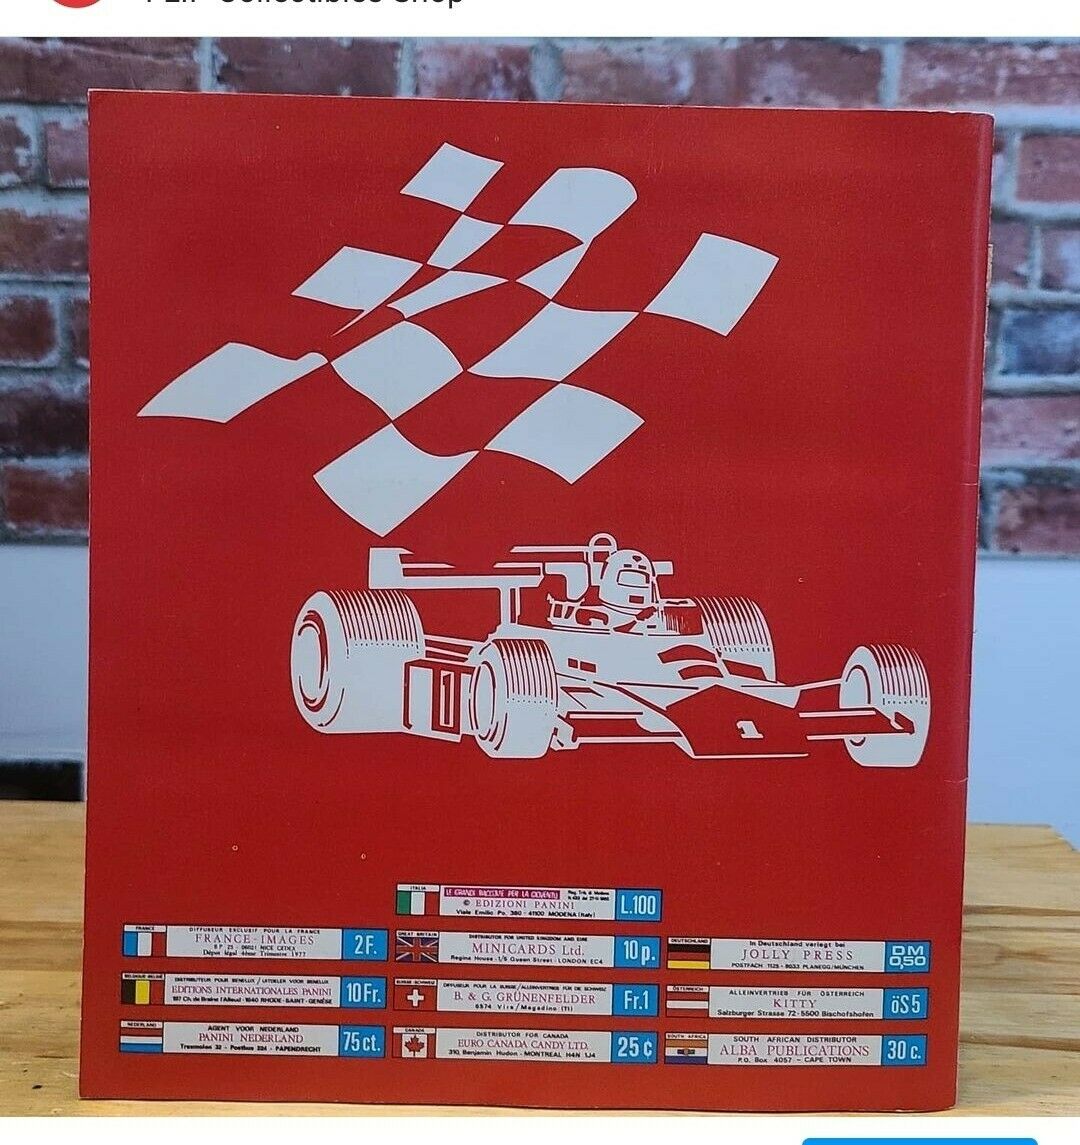 1977 Panini Super Auto Racing Sticker Album Formula 1, Indy Complete, Near Mint!